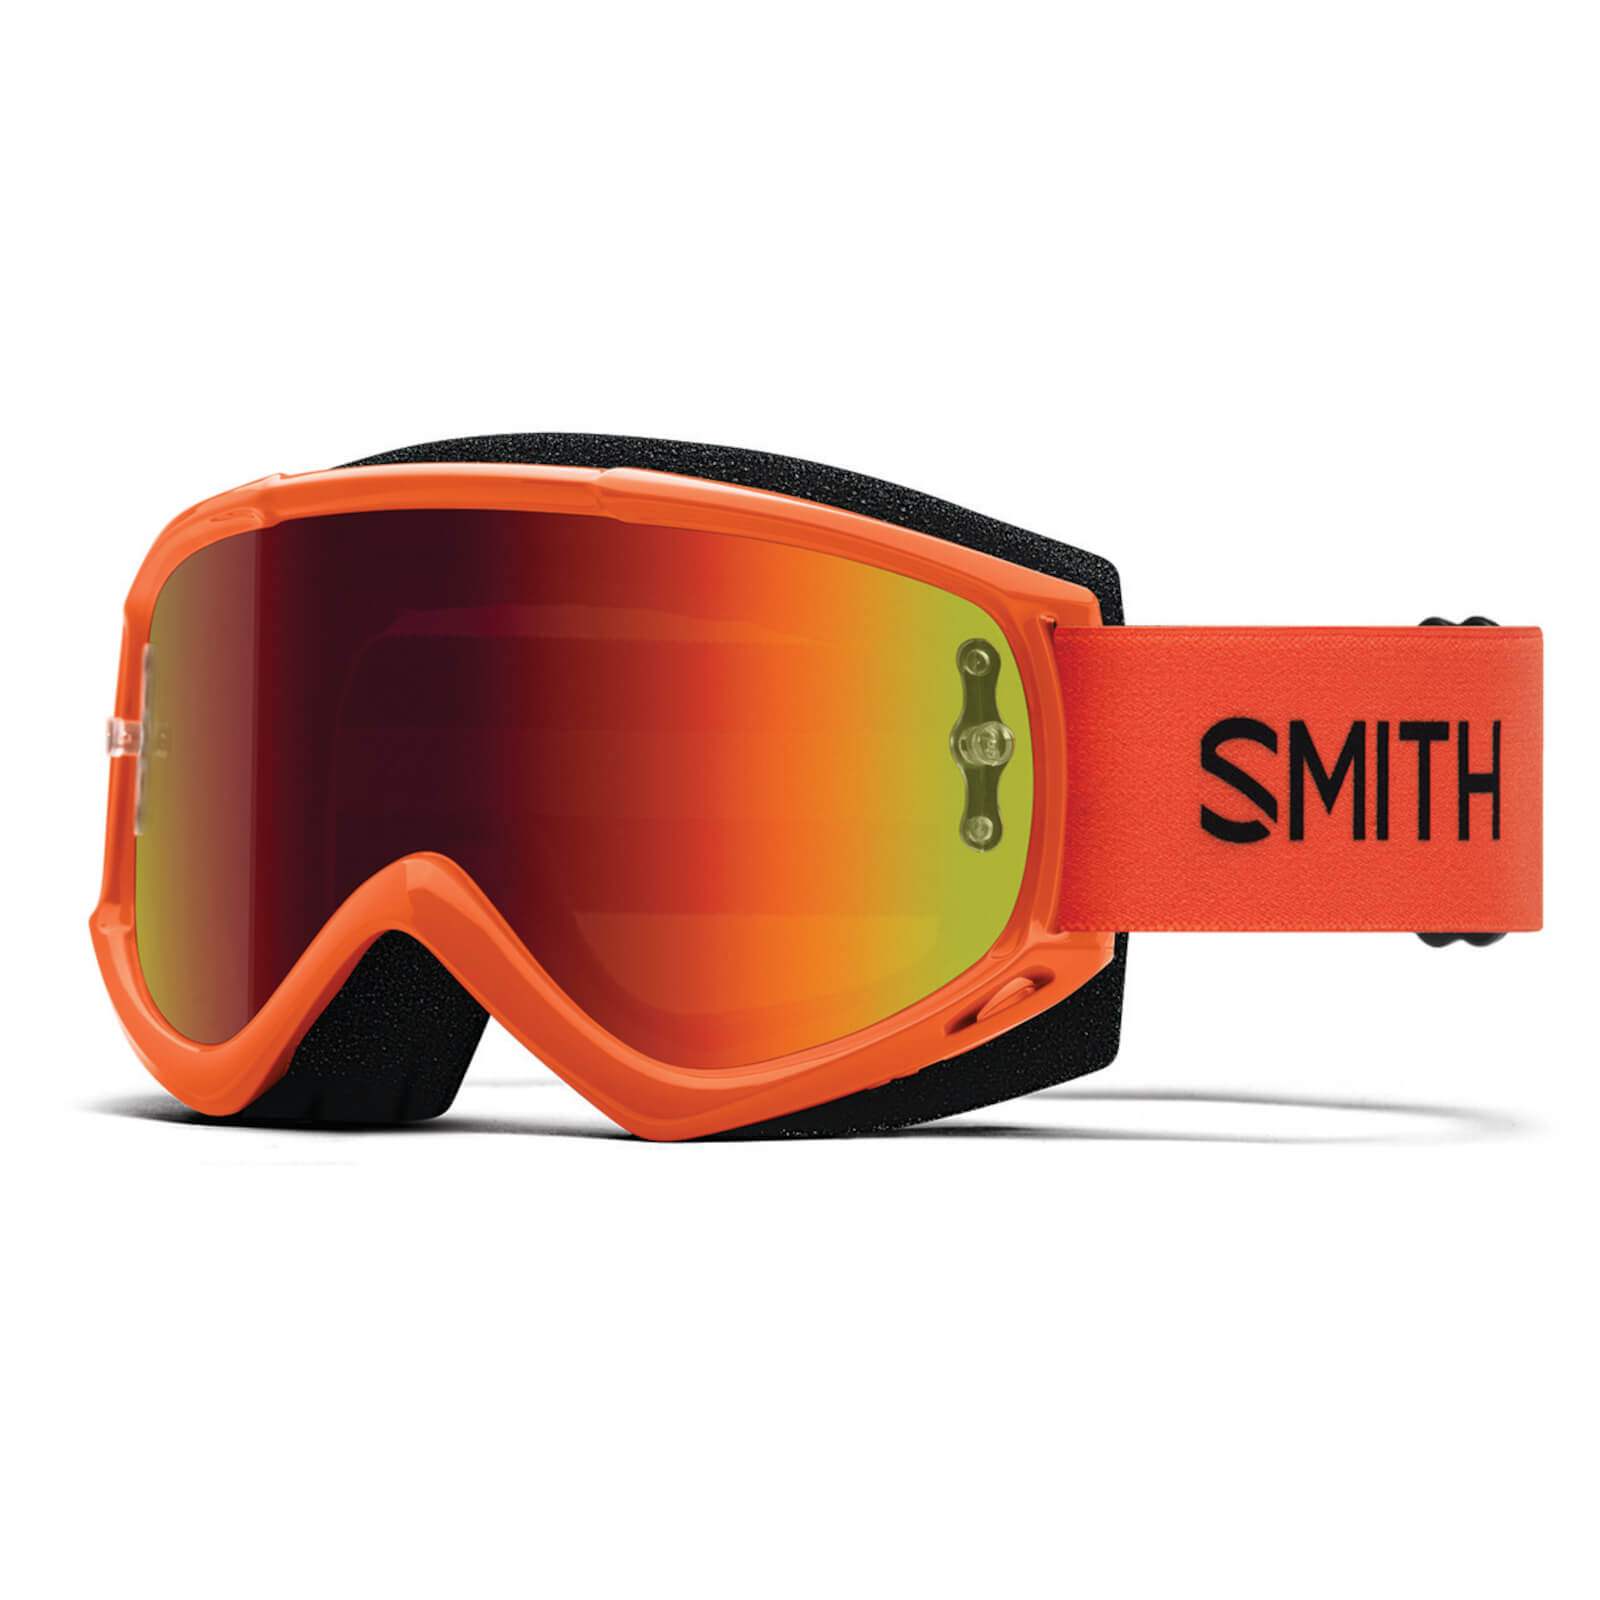 Smith Fuel V.1 MAX MTB Goggles - Cinder - Red Mirror Antifog